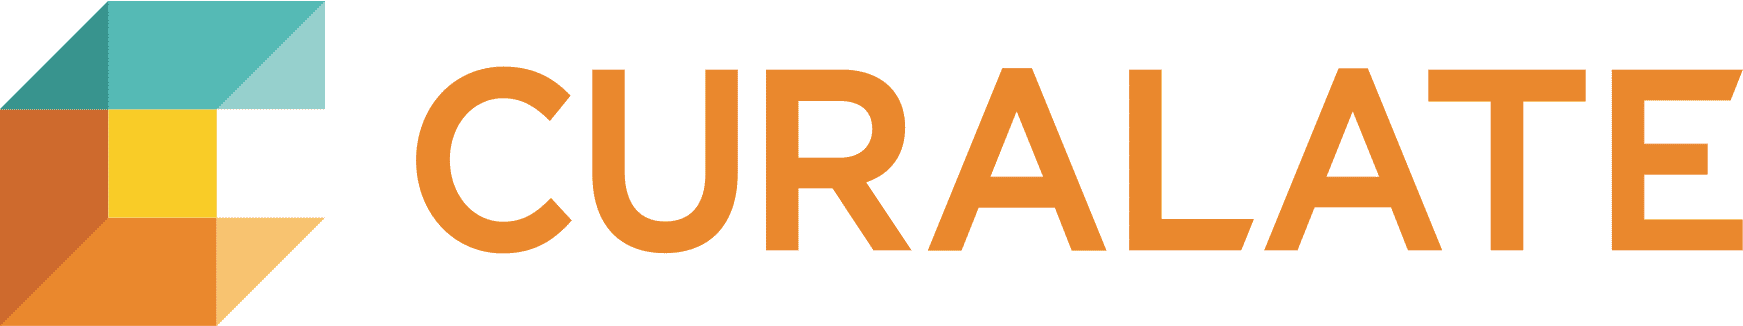 logo-industry-curalate